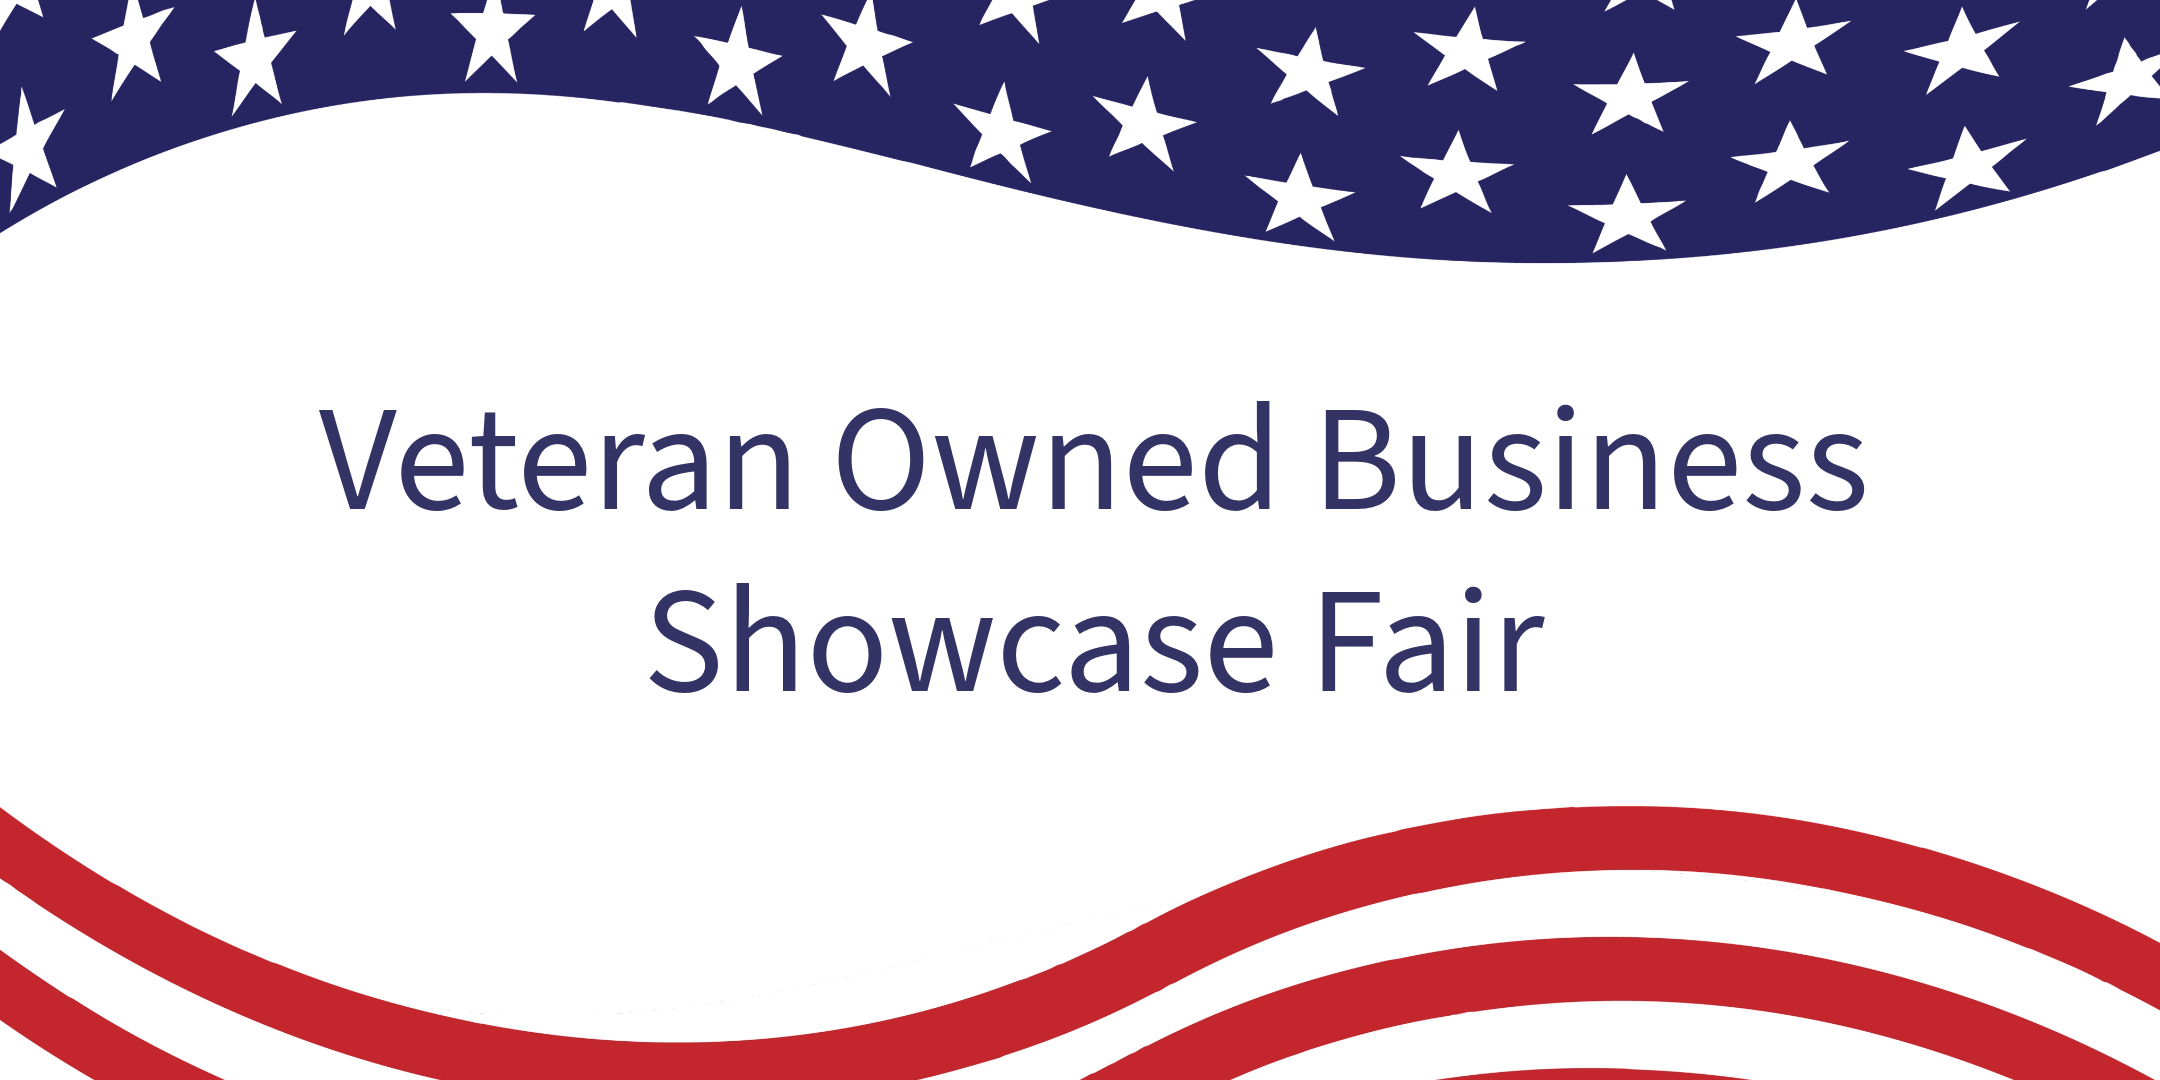 Veteran Owned Business Showcase Fair